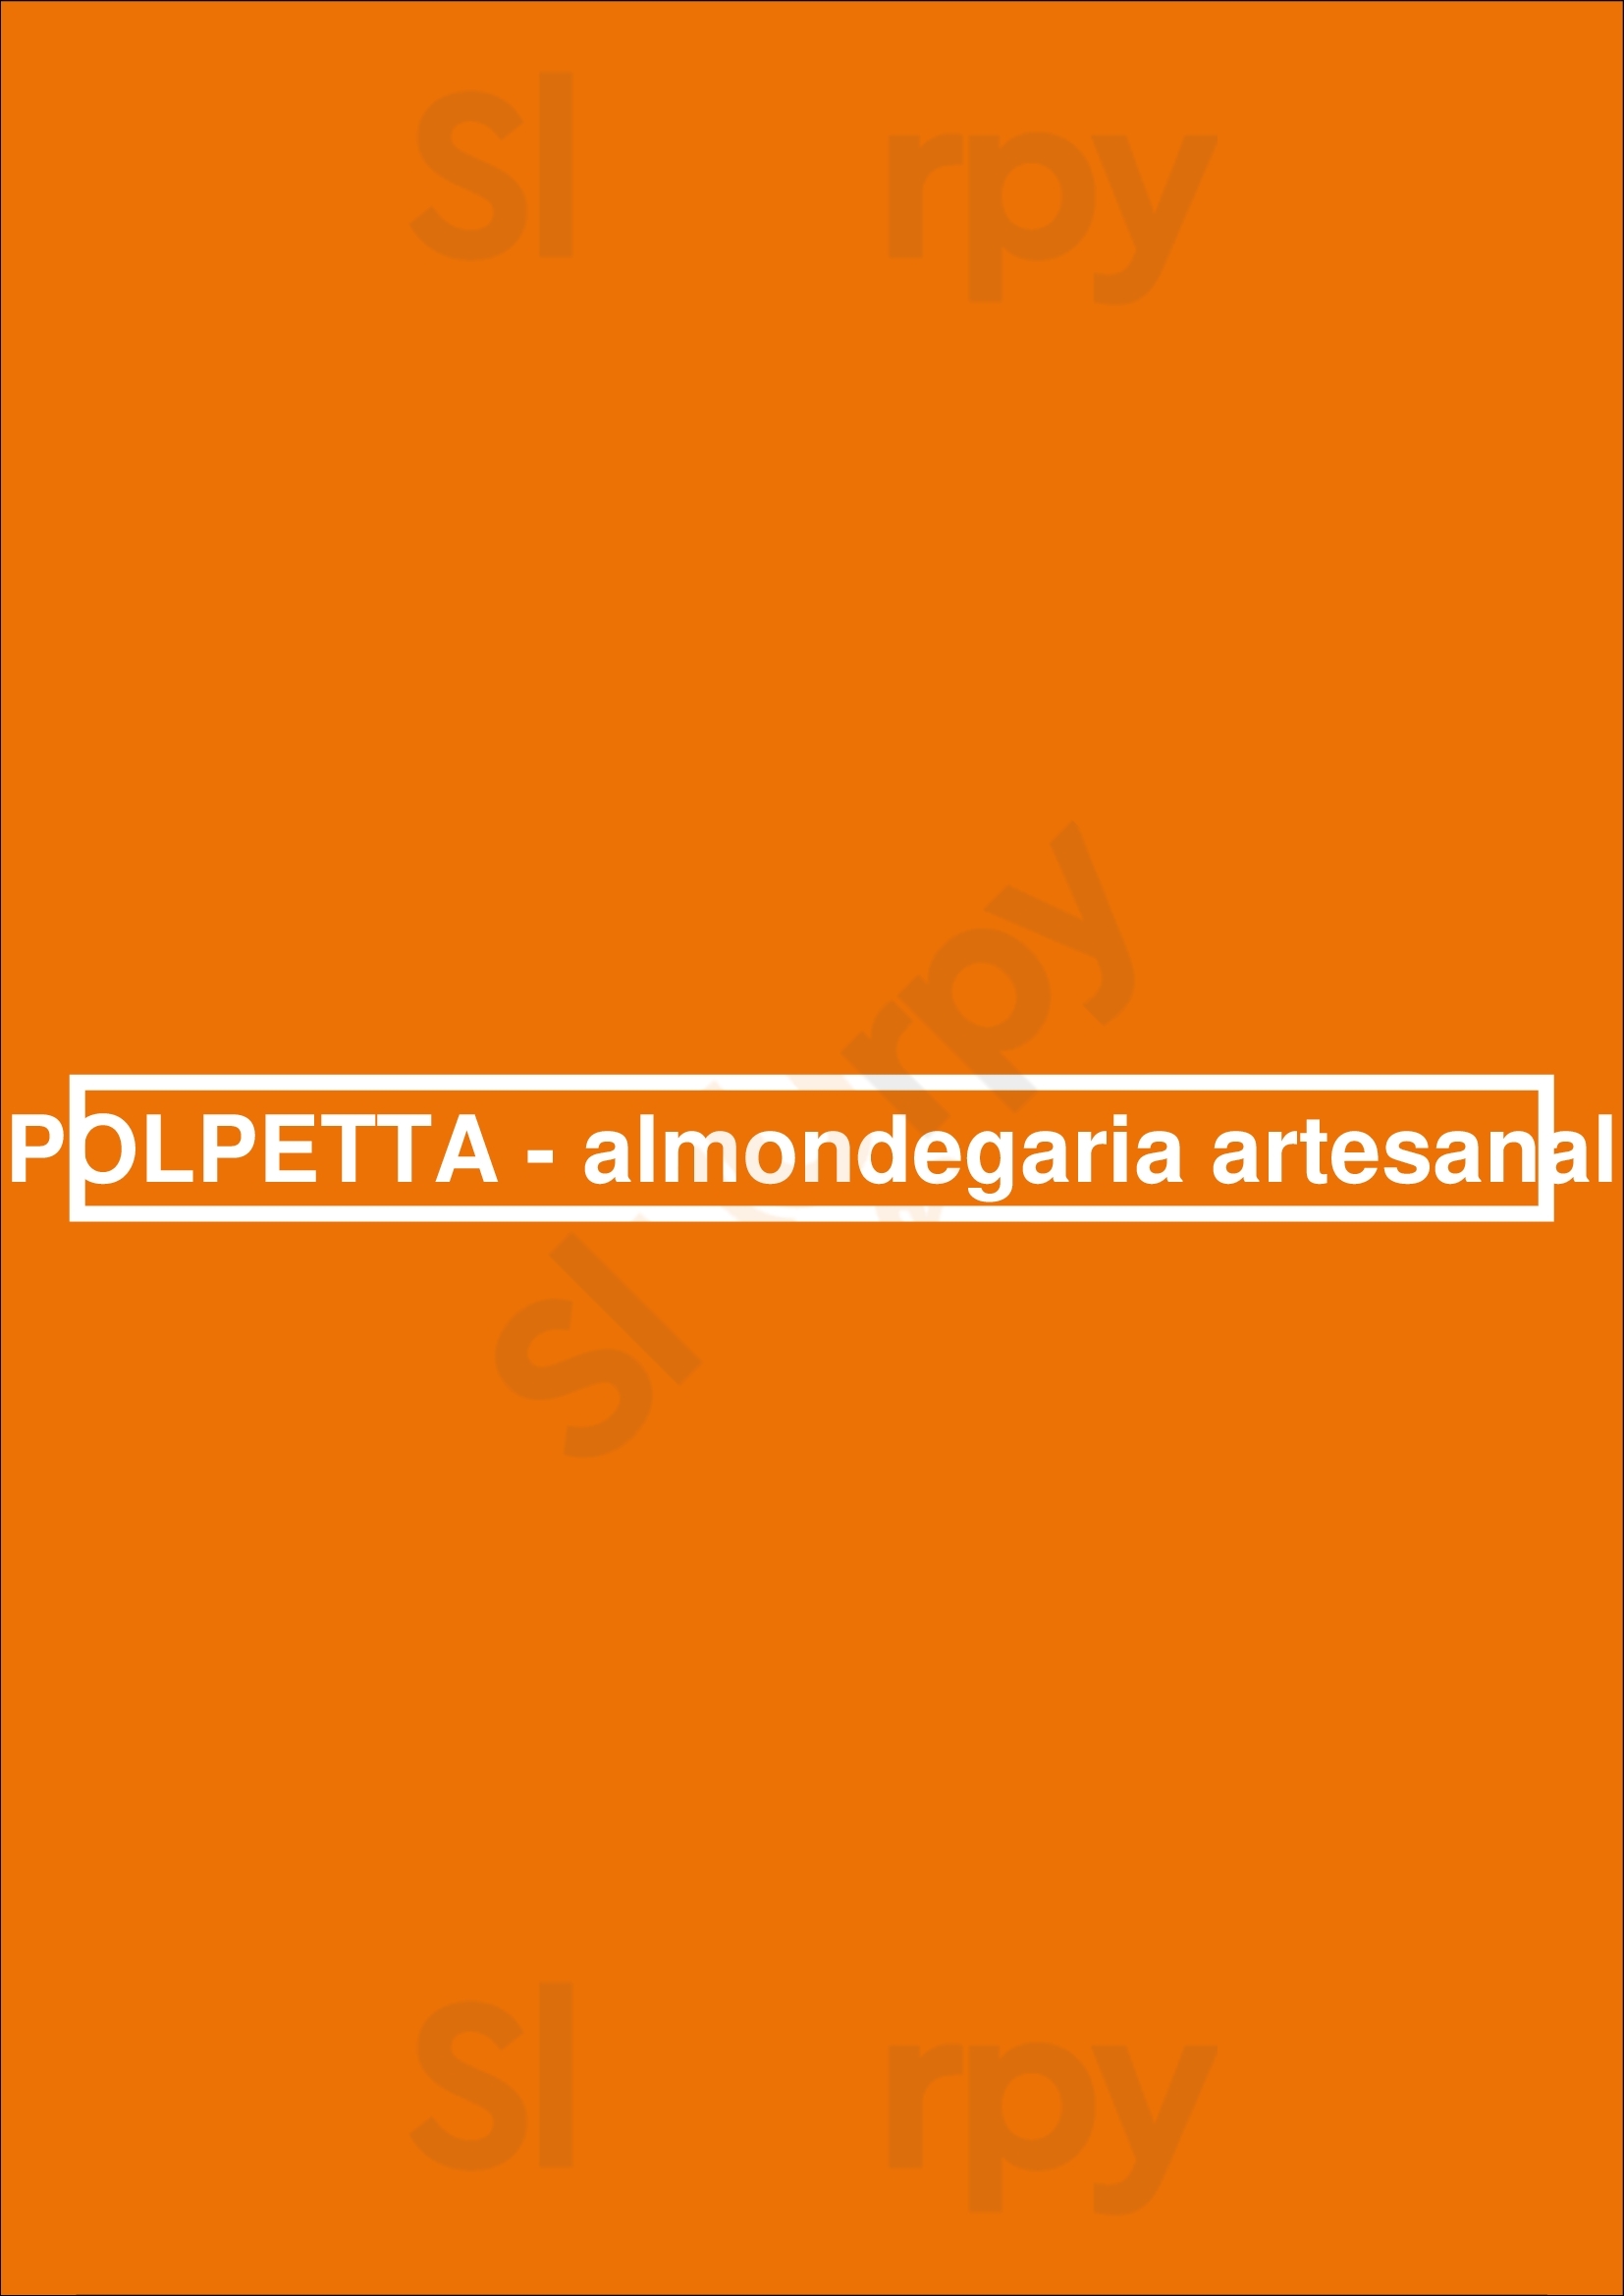 Polpetta - Almondegaria Artesanal Lisboa Menu - 1